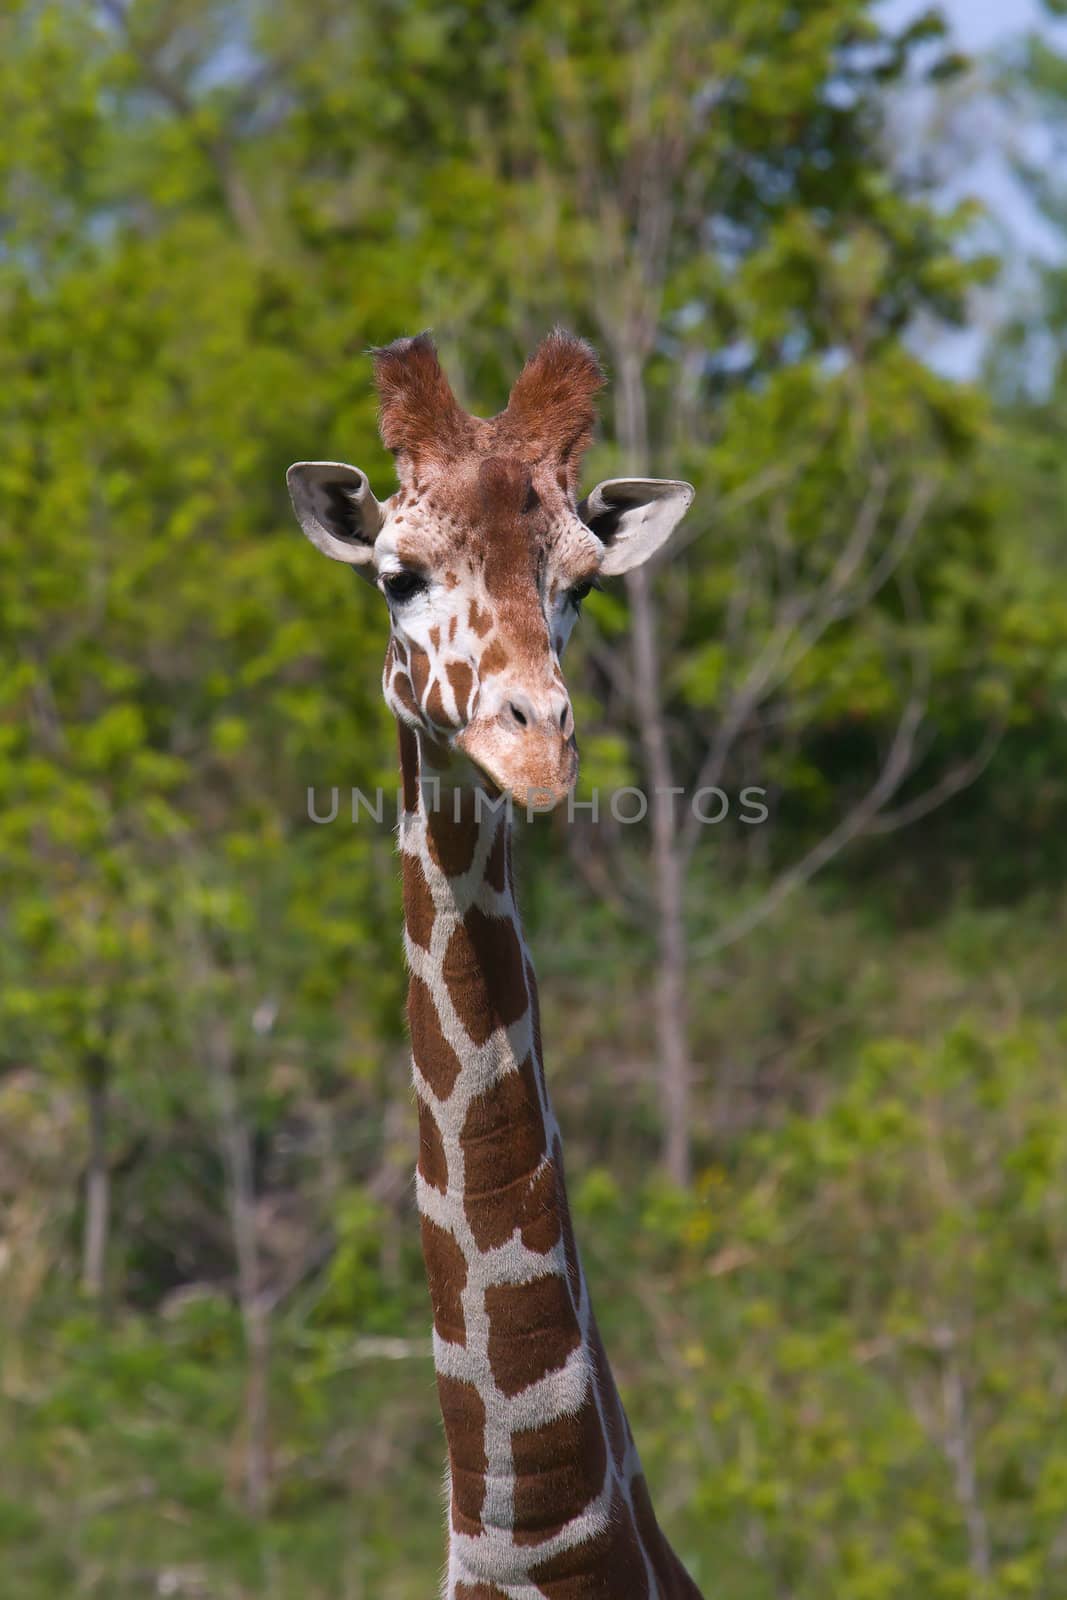 Head and Neck shot of a giraffe.